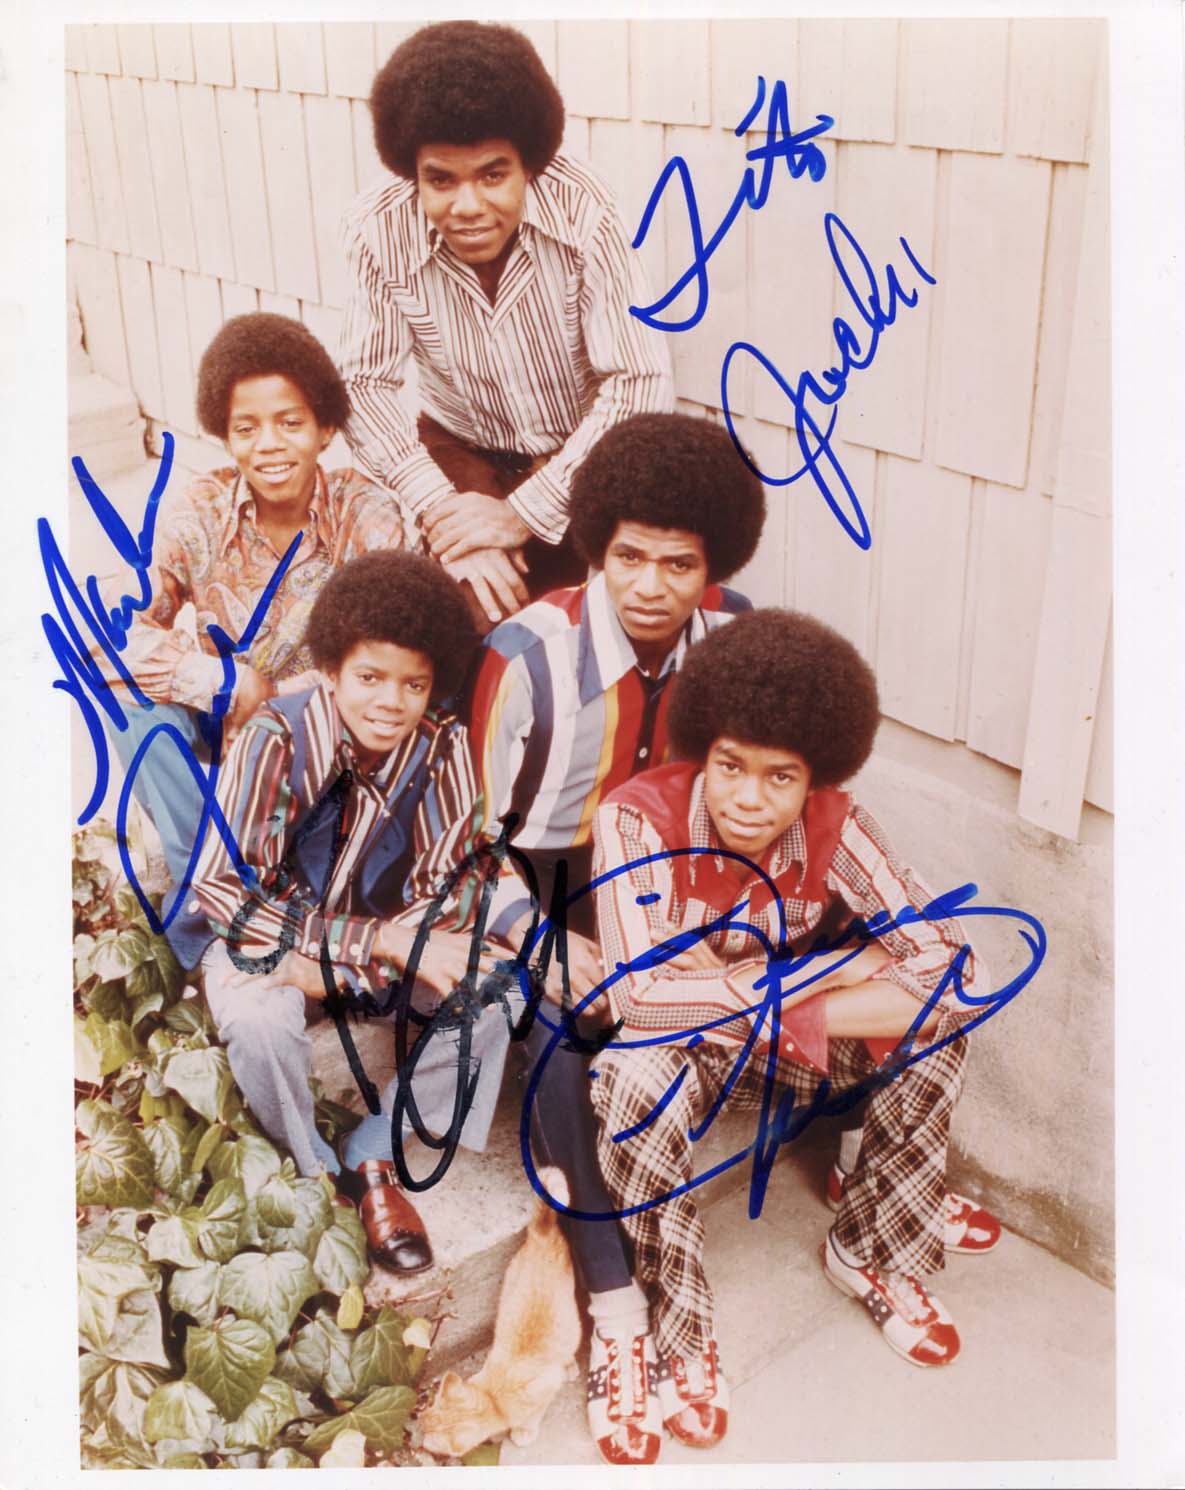  Jackson 5 Autograph Autogramm | ID 7122808635541